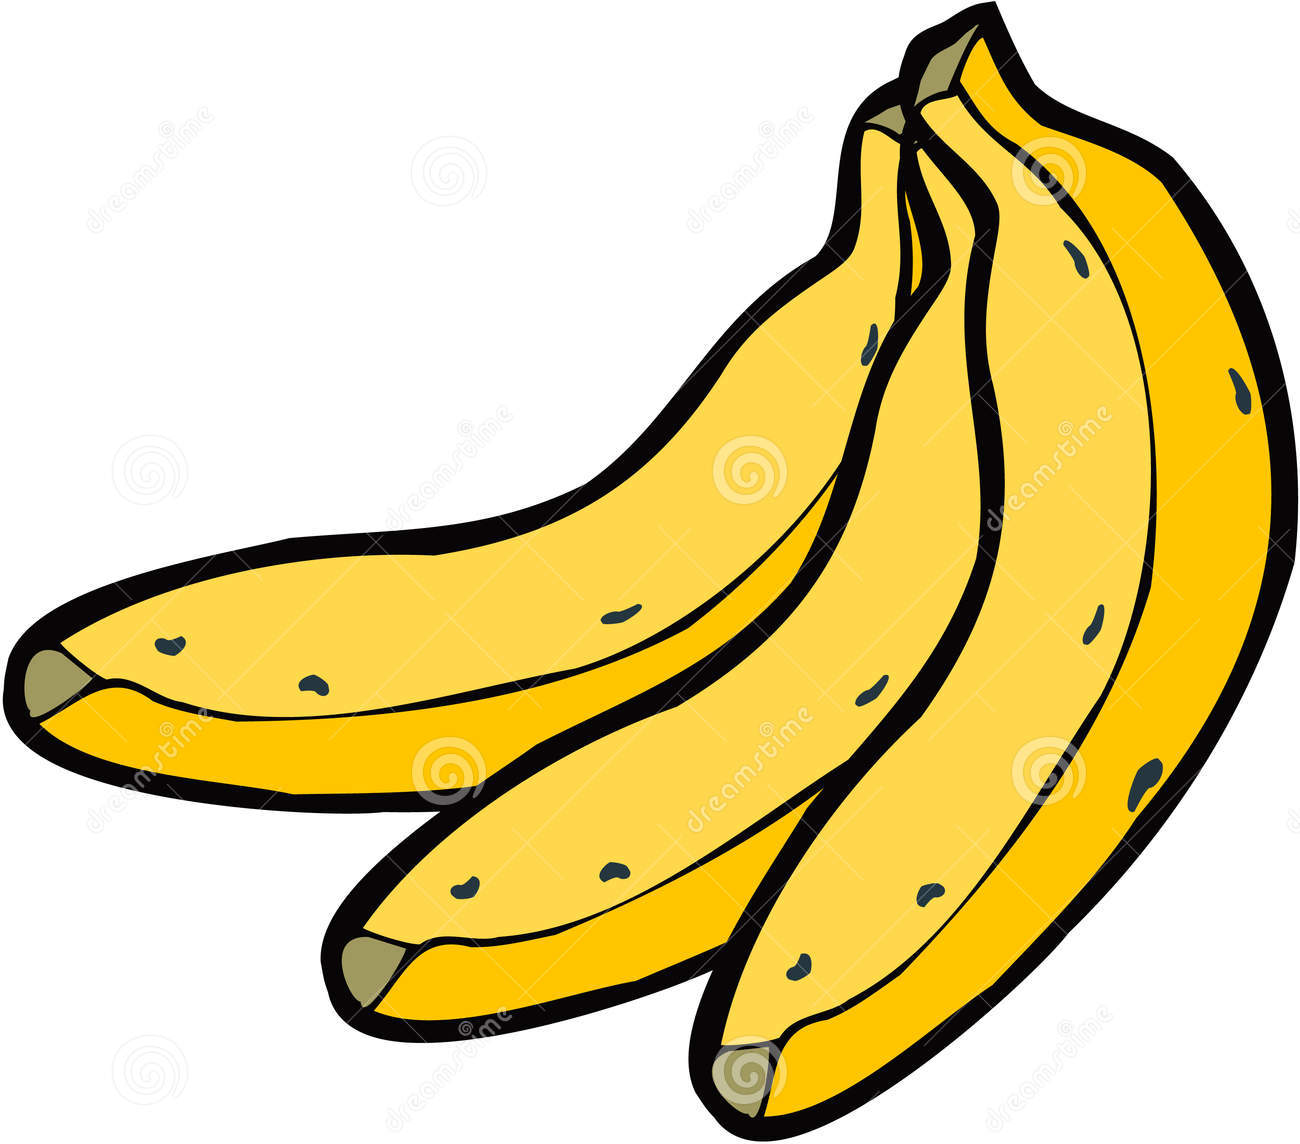 banana clipart black and white